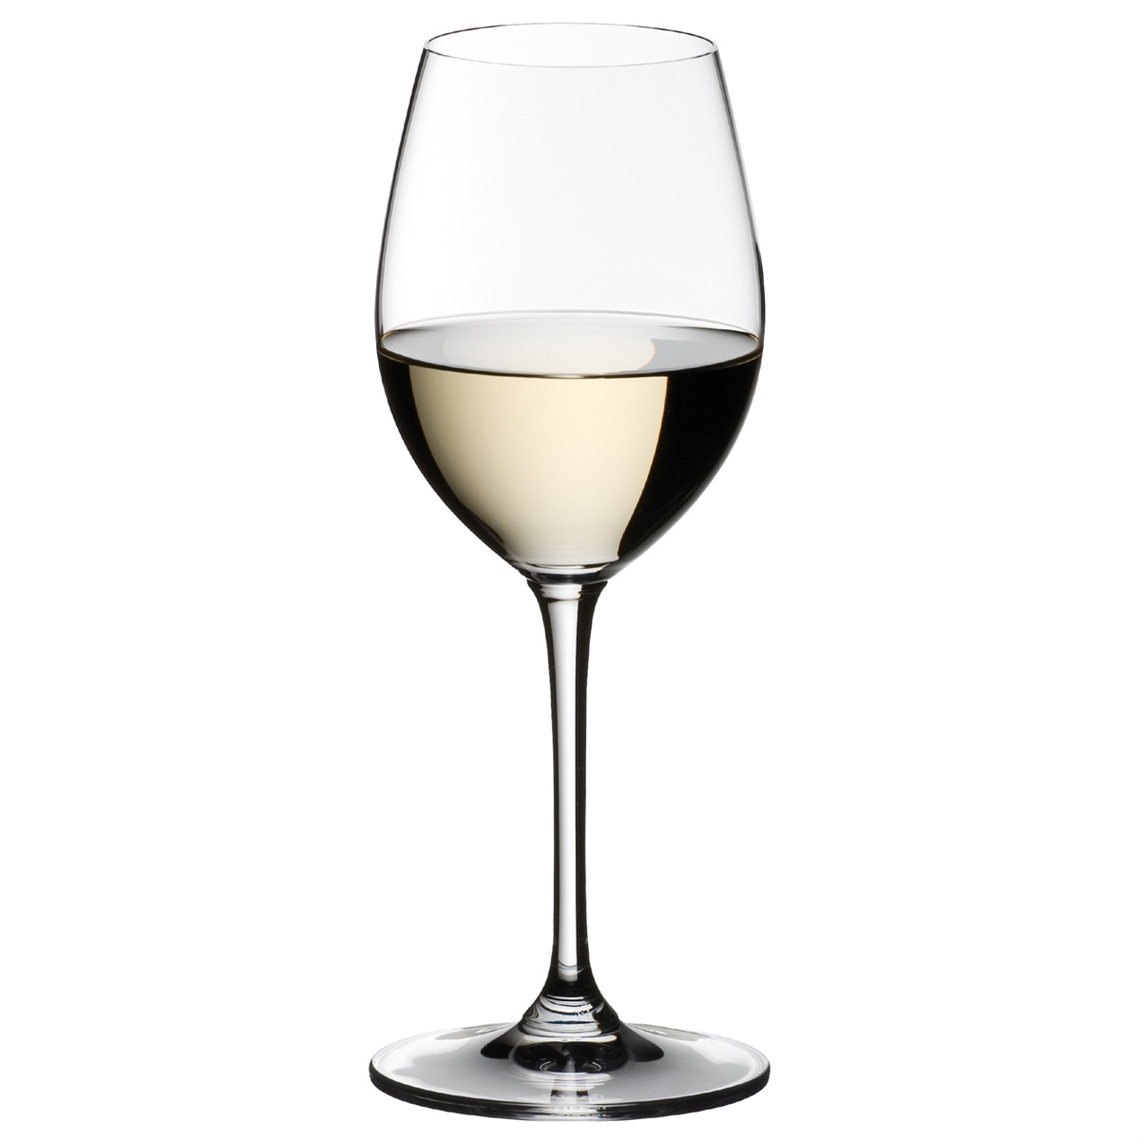 View more wine tasting glasses from our Dessert Wine Glasses range